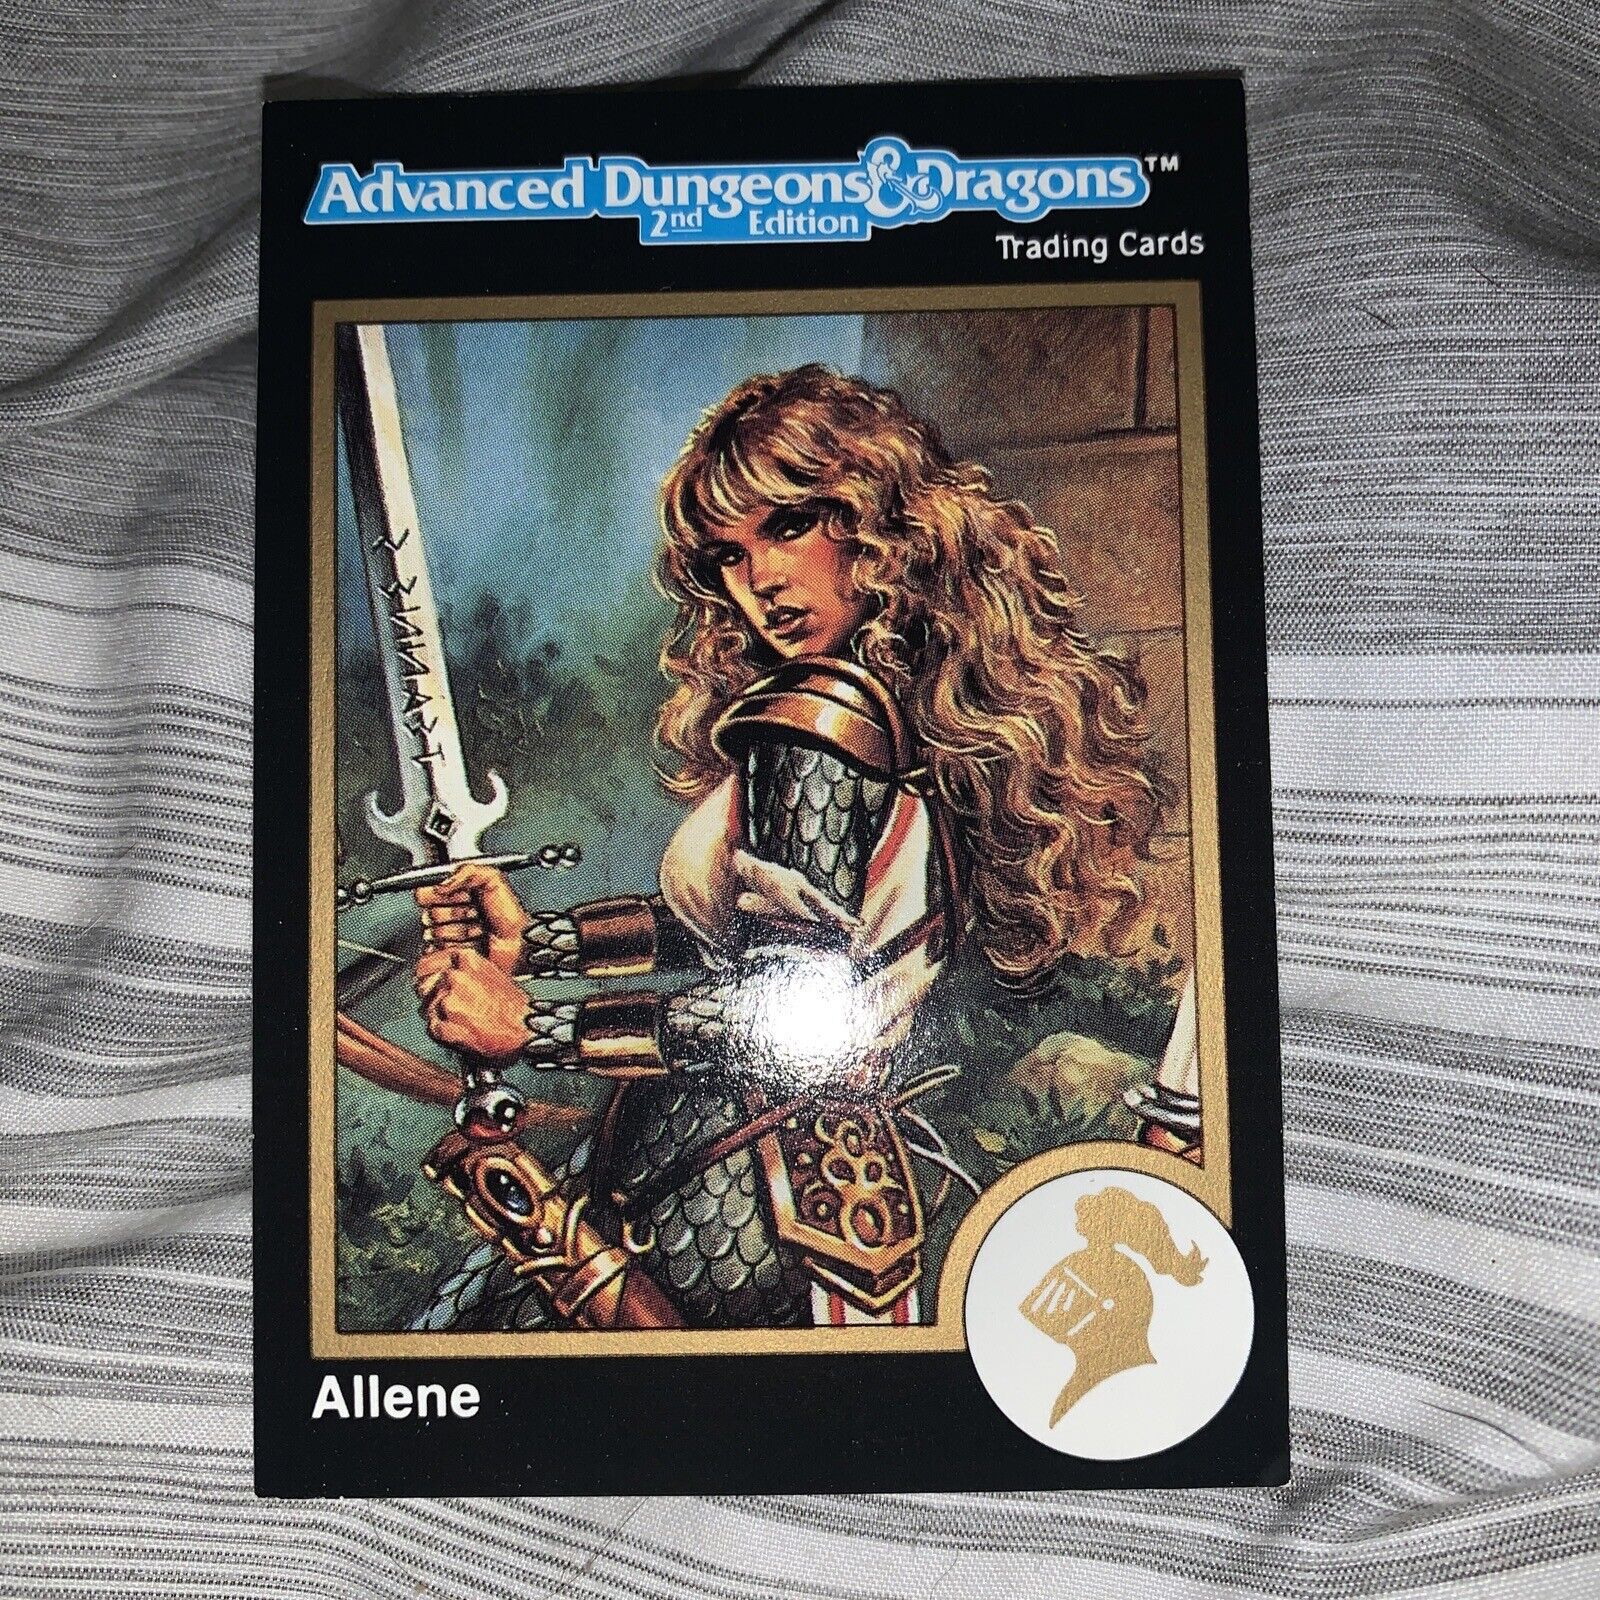 1991 TSR AD&D Gold Border Fantasy Card 462 Dungeons & Dragons Clyde Caldwell Art